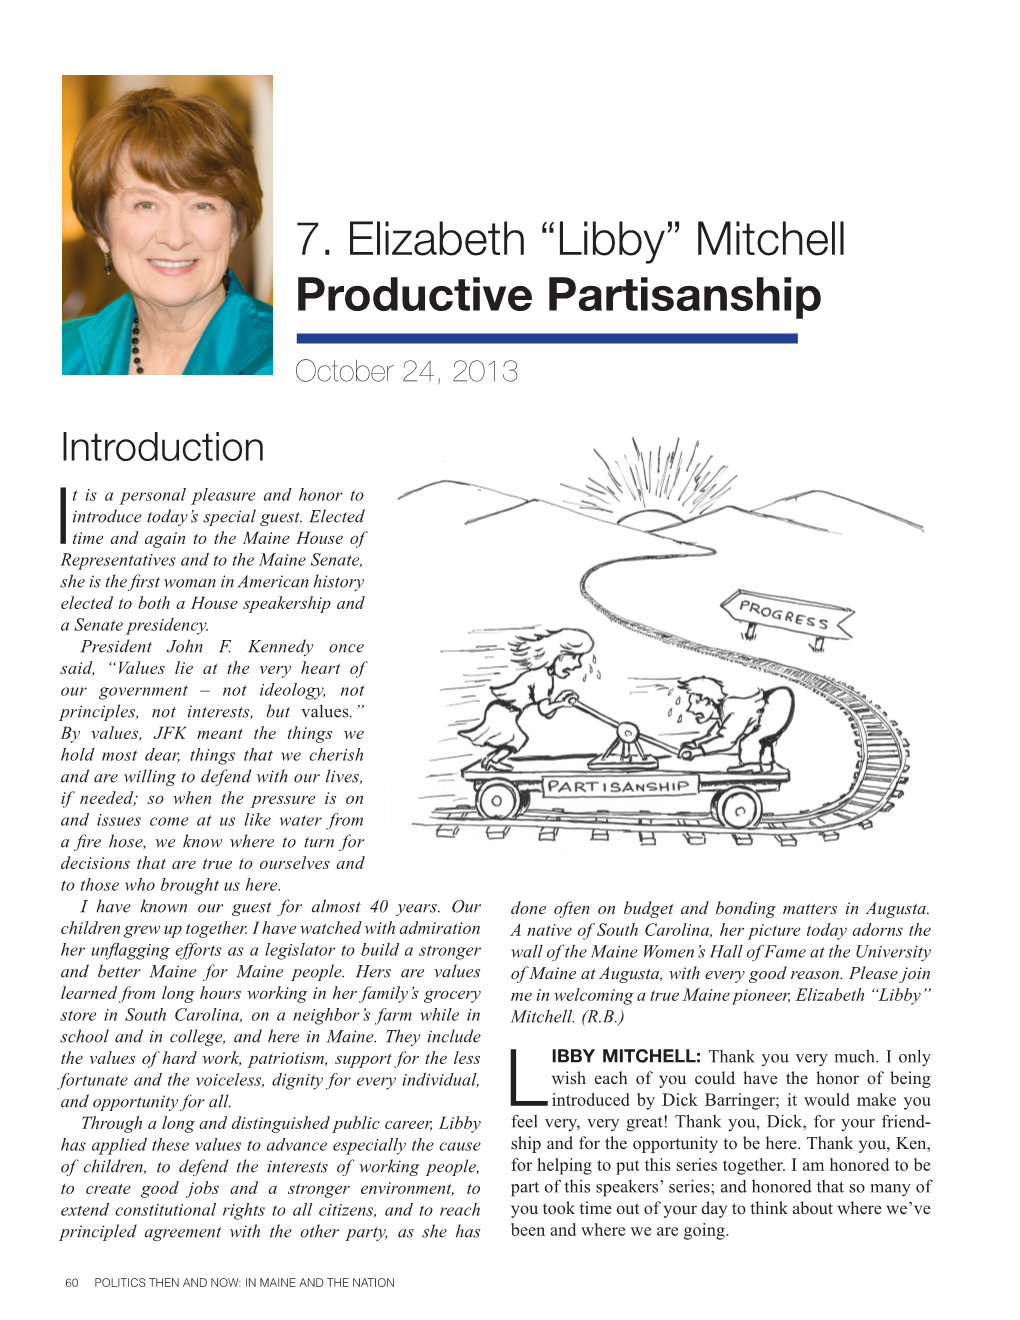 7. Elizabeth “Libby” Mitchell Productive Partisanship